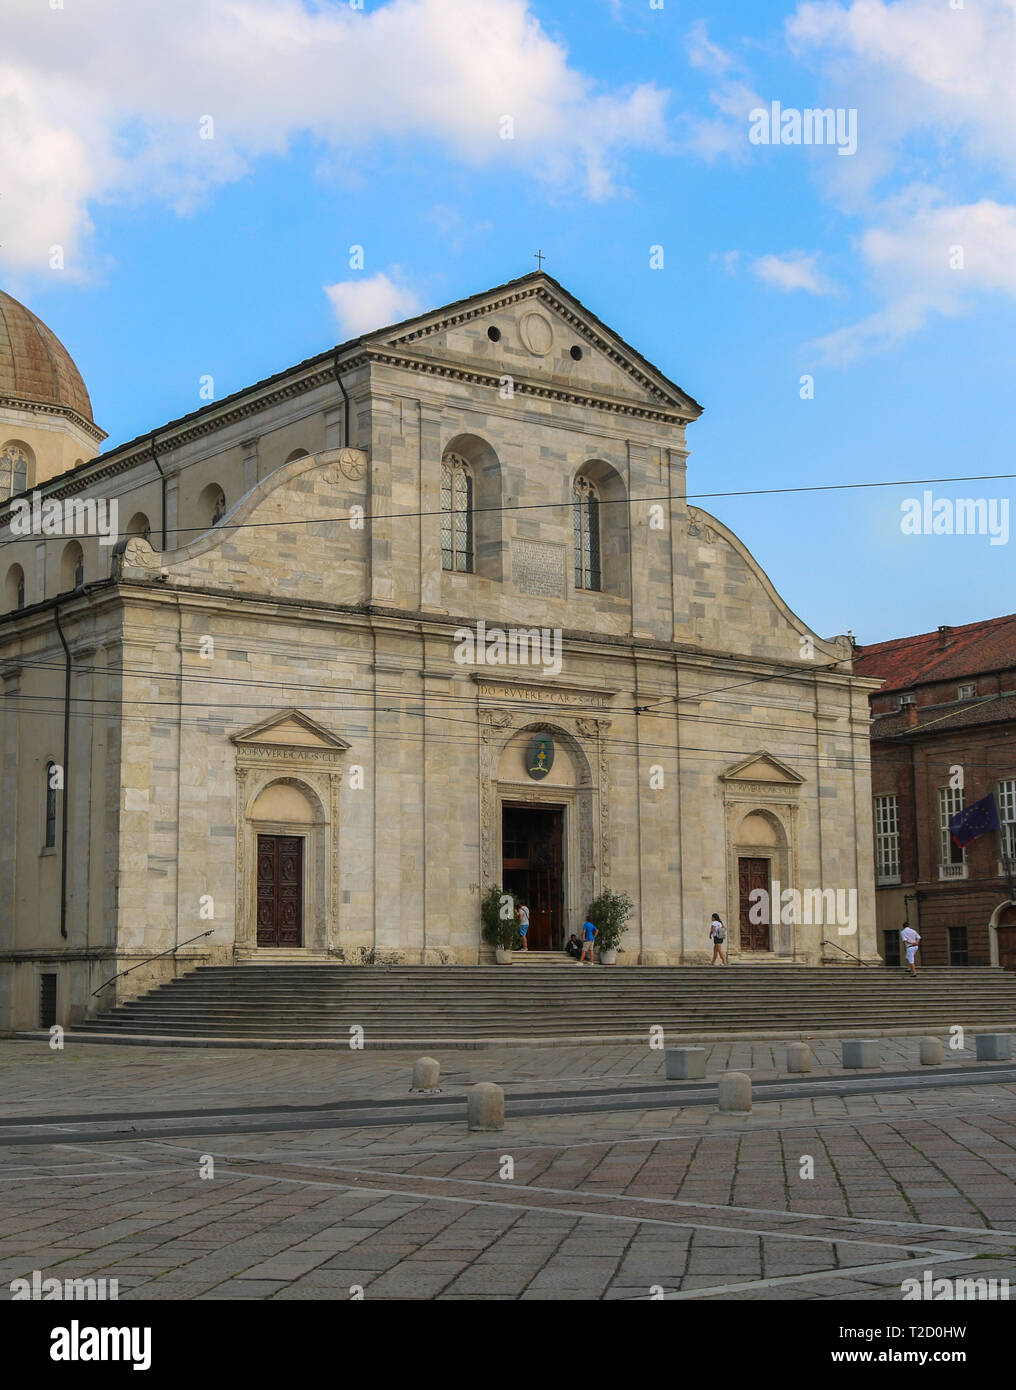 Cathedral of Saint John the Baptist, Torino Italy. Shoot in July 2017 Stock Photo